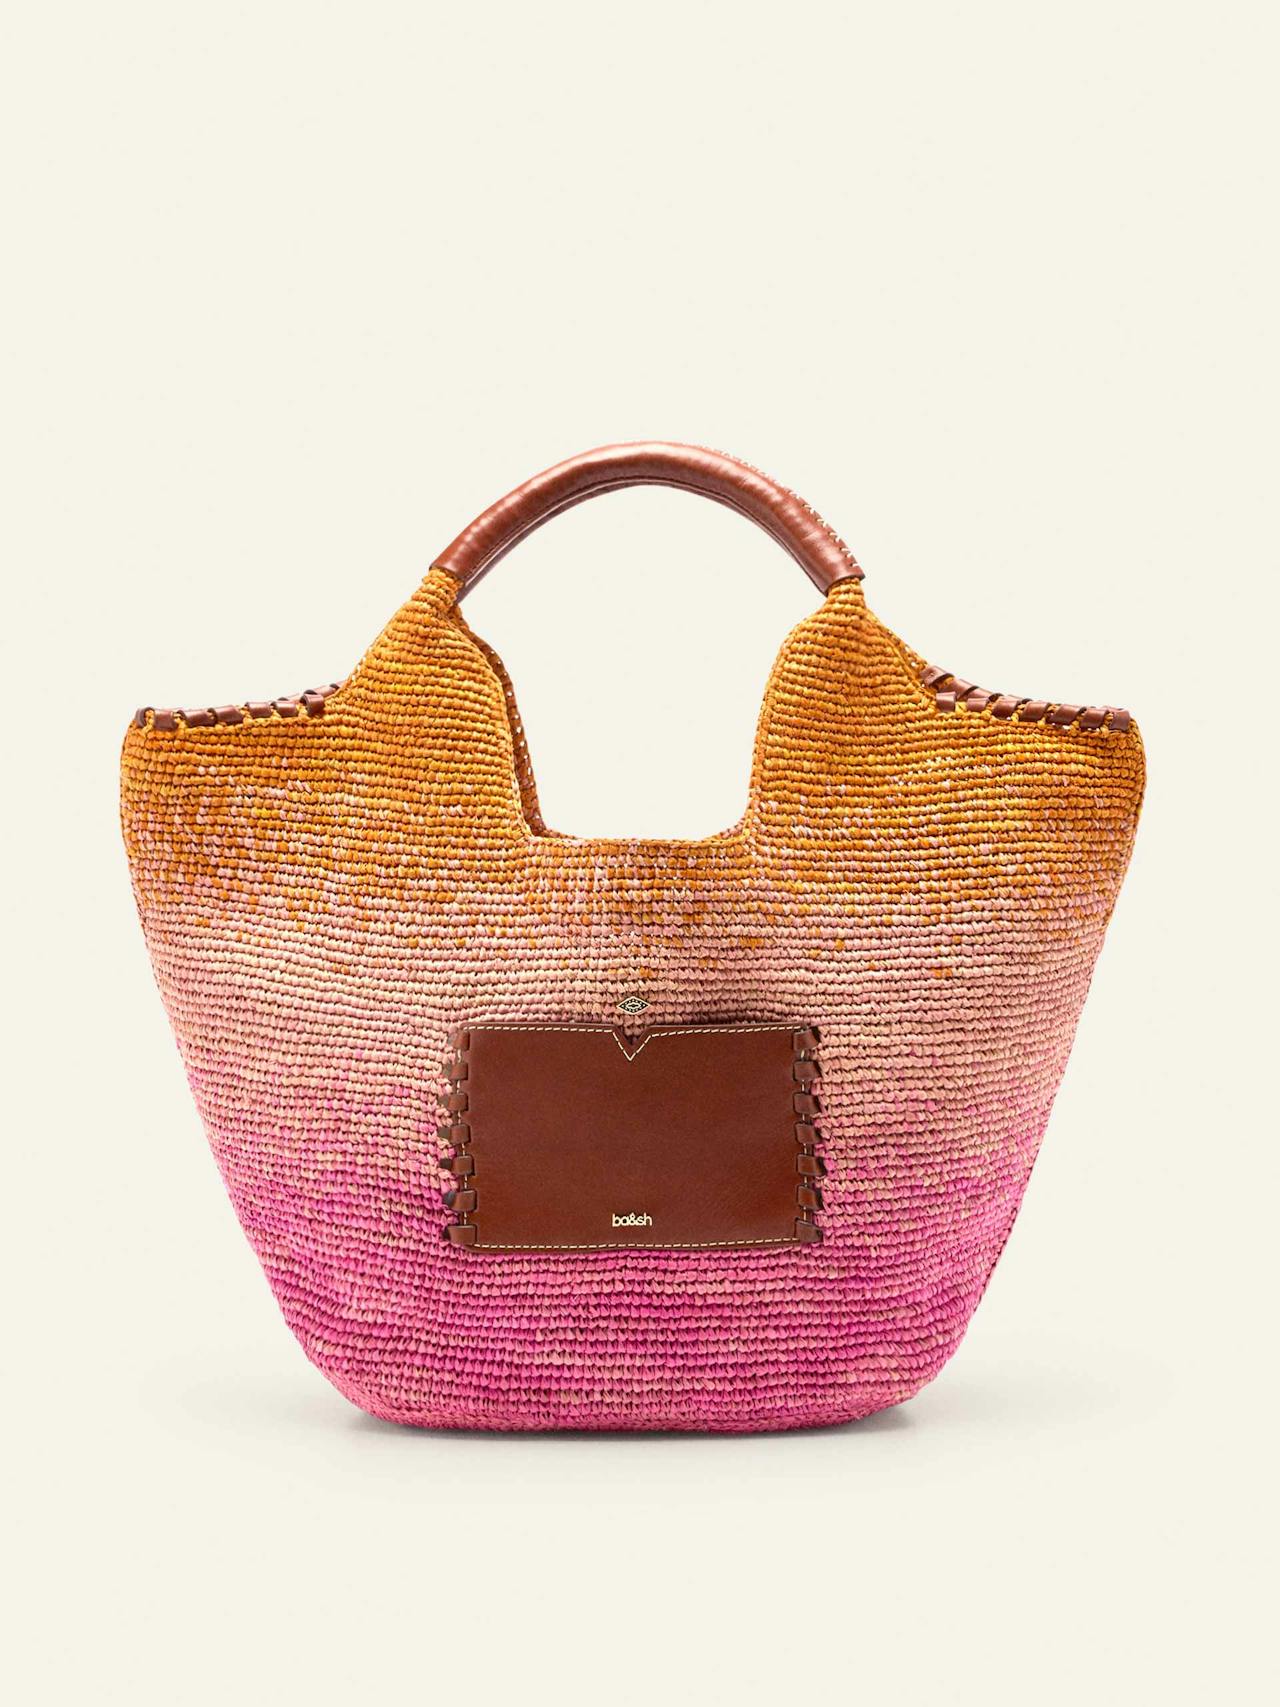 Beach Ara bag pink